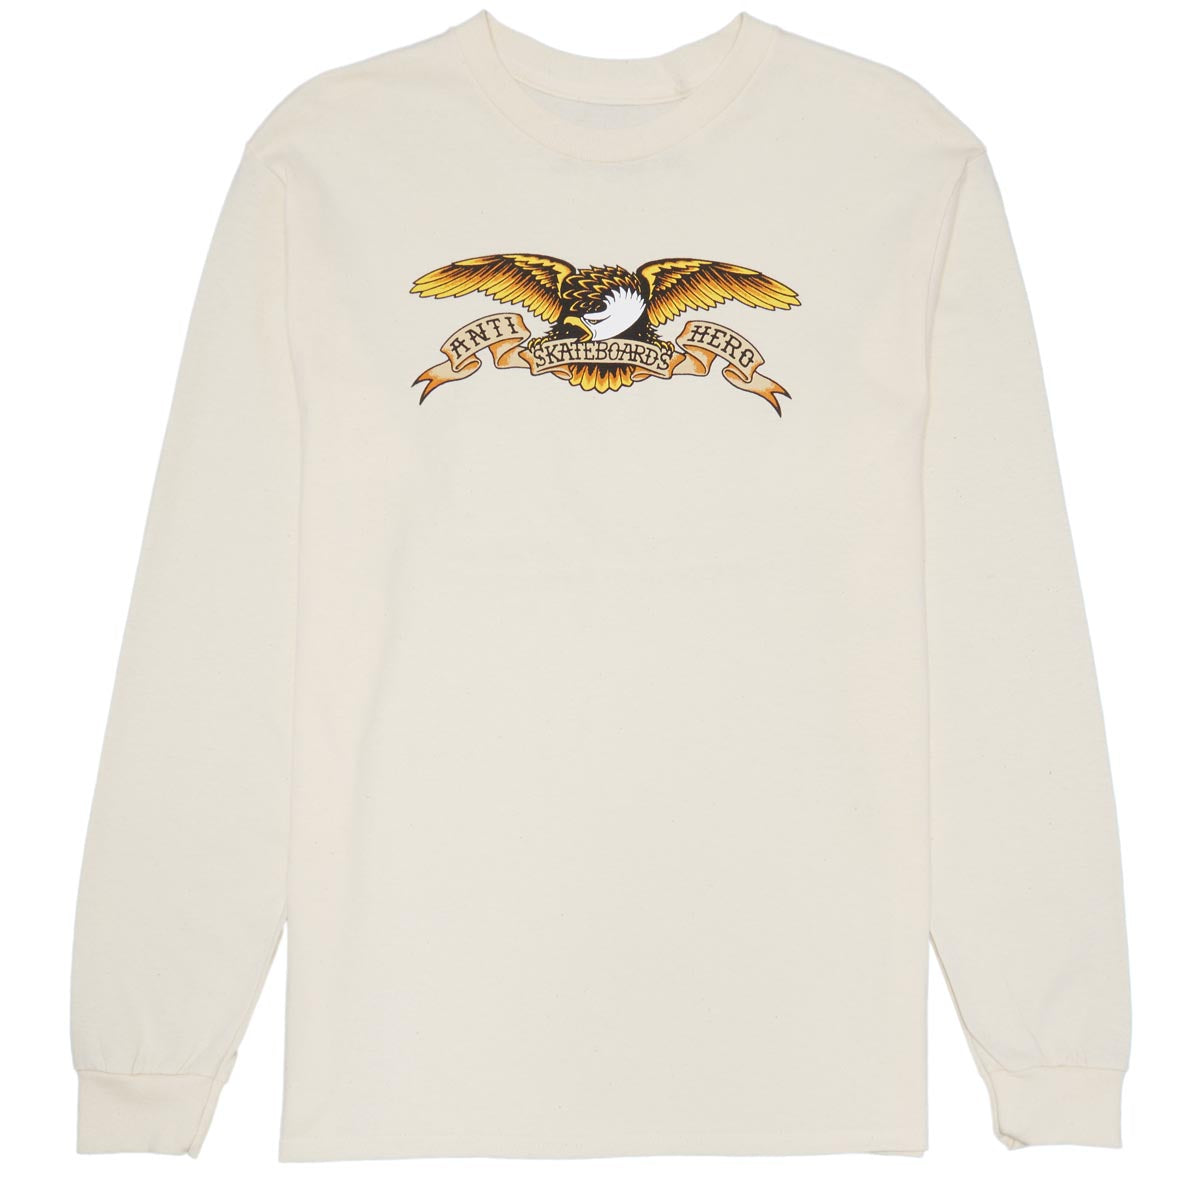 Anti-Hero Eagle Long Sleeve T-Shirt - Natural/Black Multi Color image 1